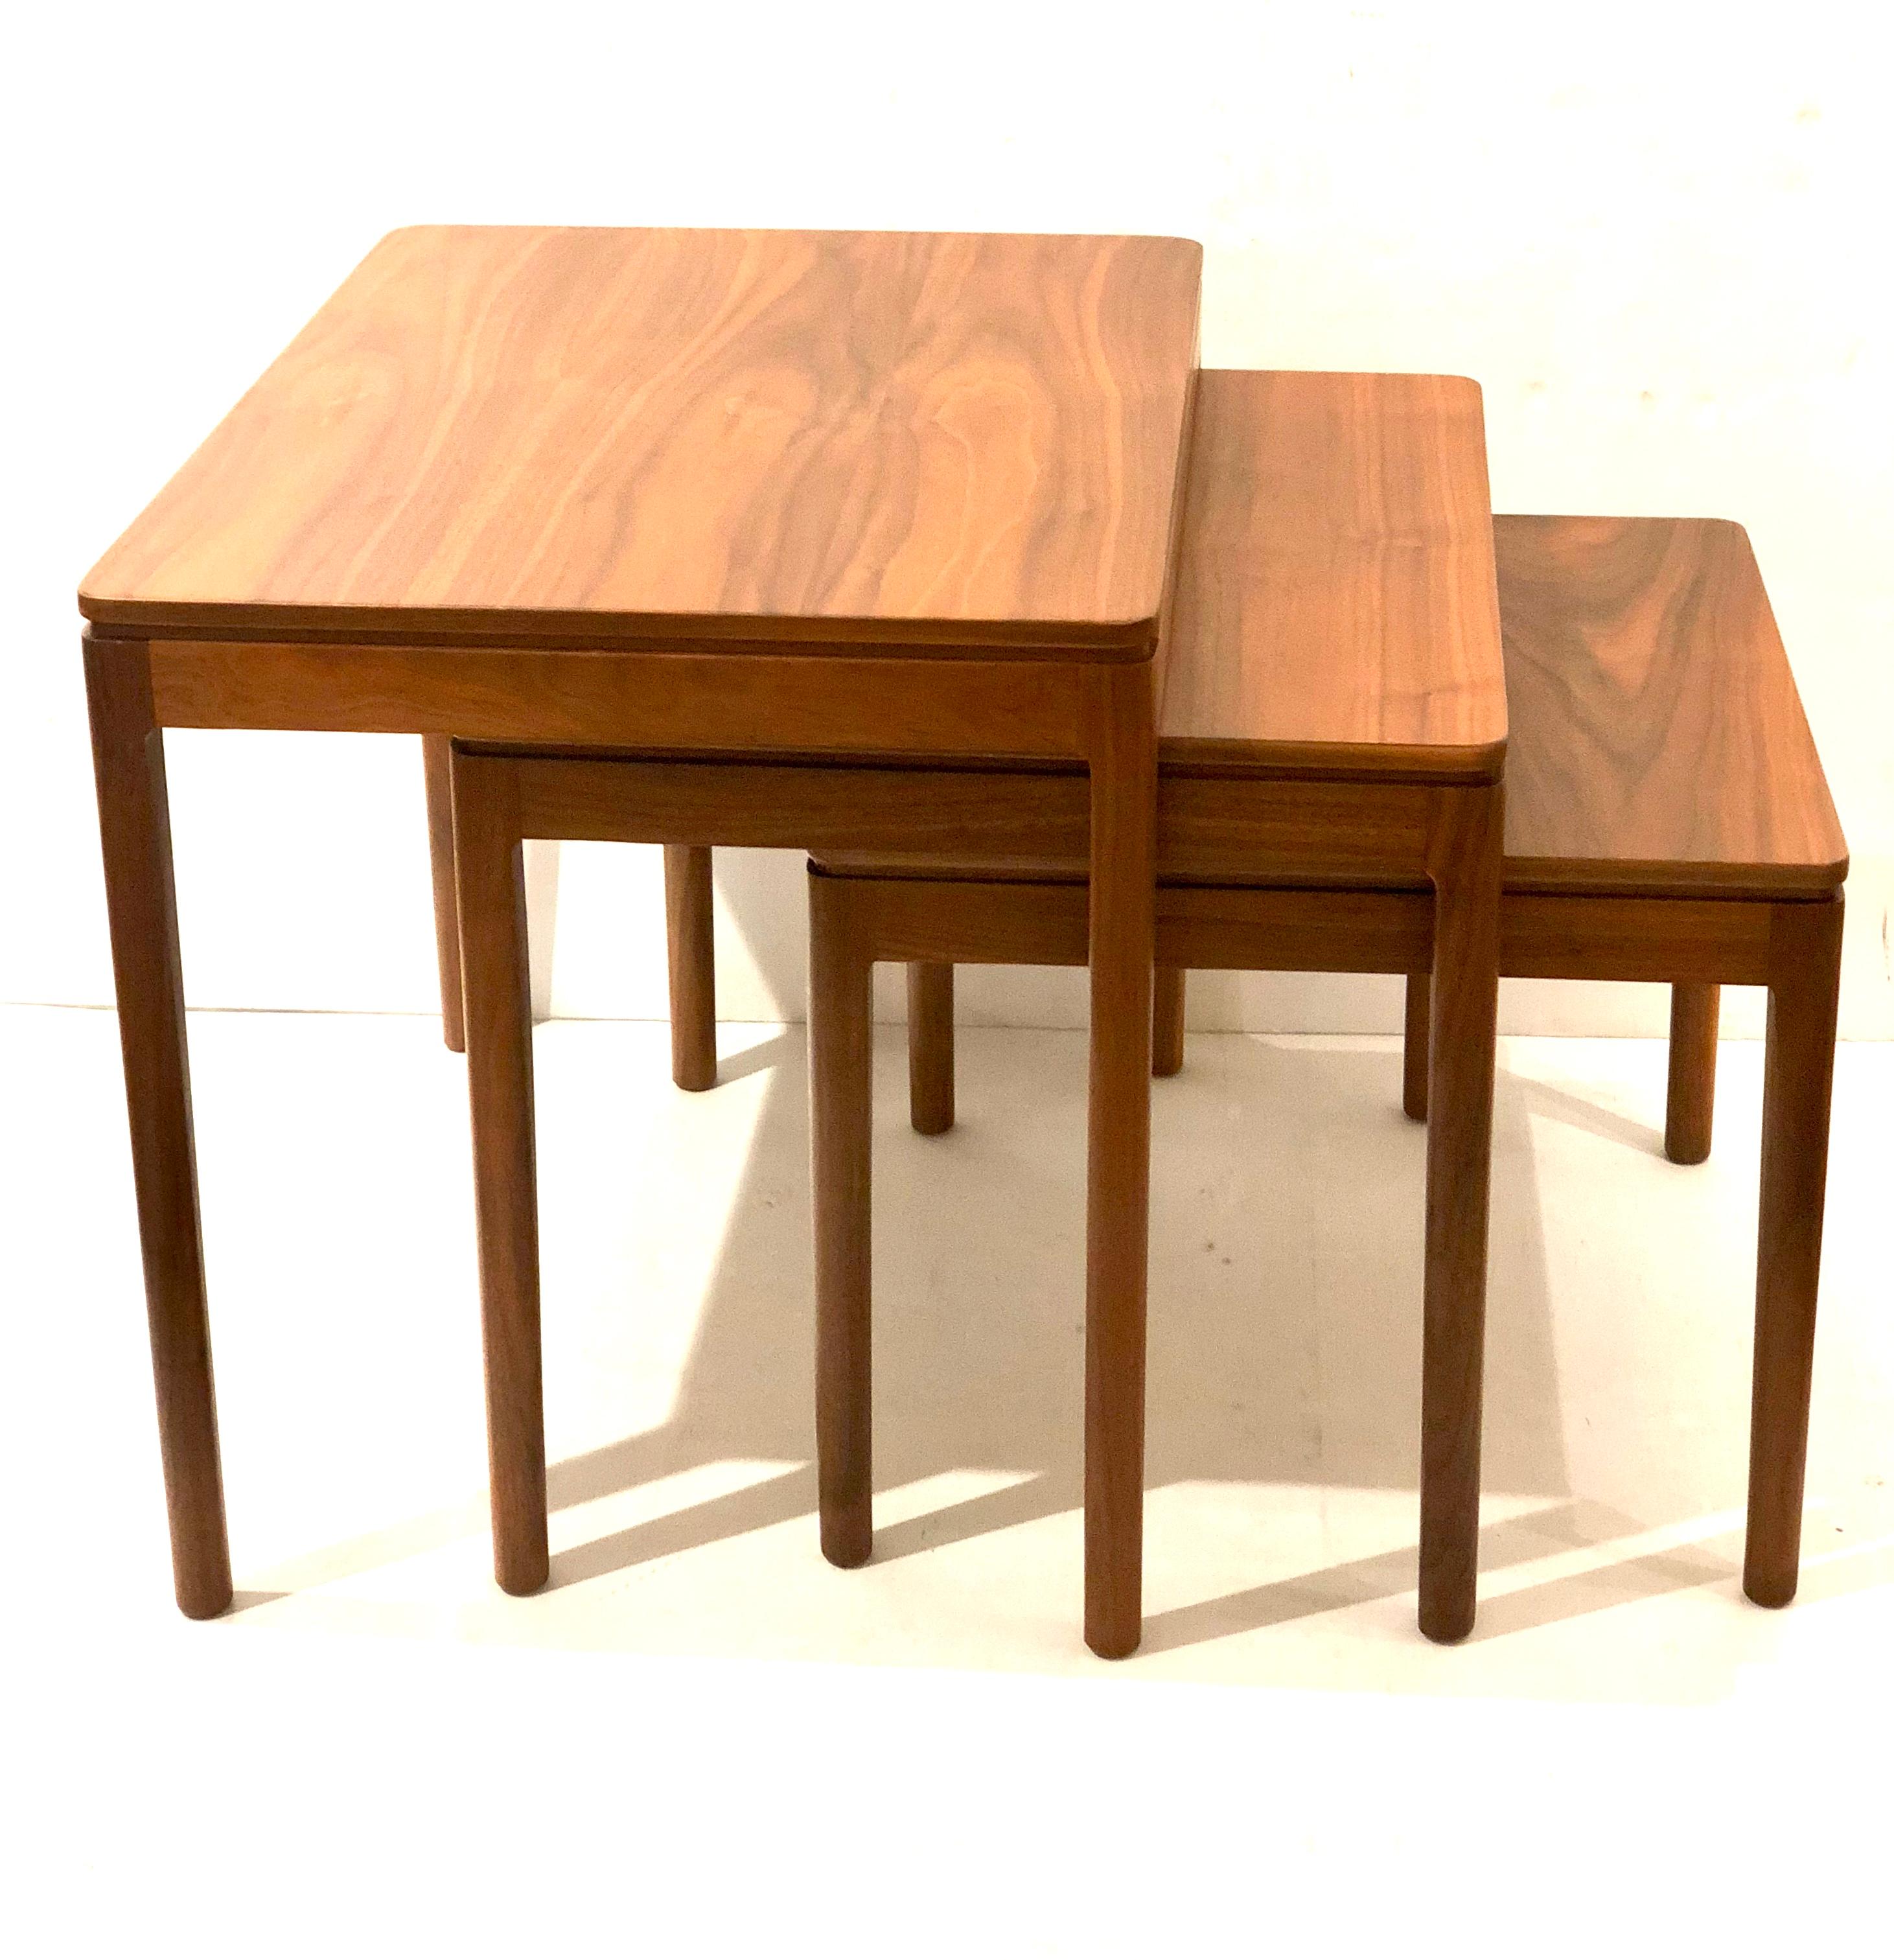 American Mid-Century Modern Set of 3 Walnut Nesting Tables by Drexel 1